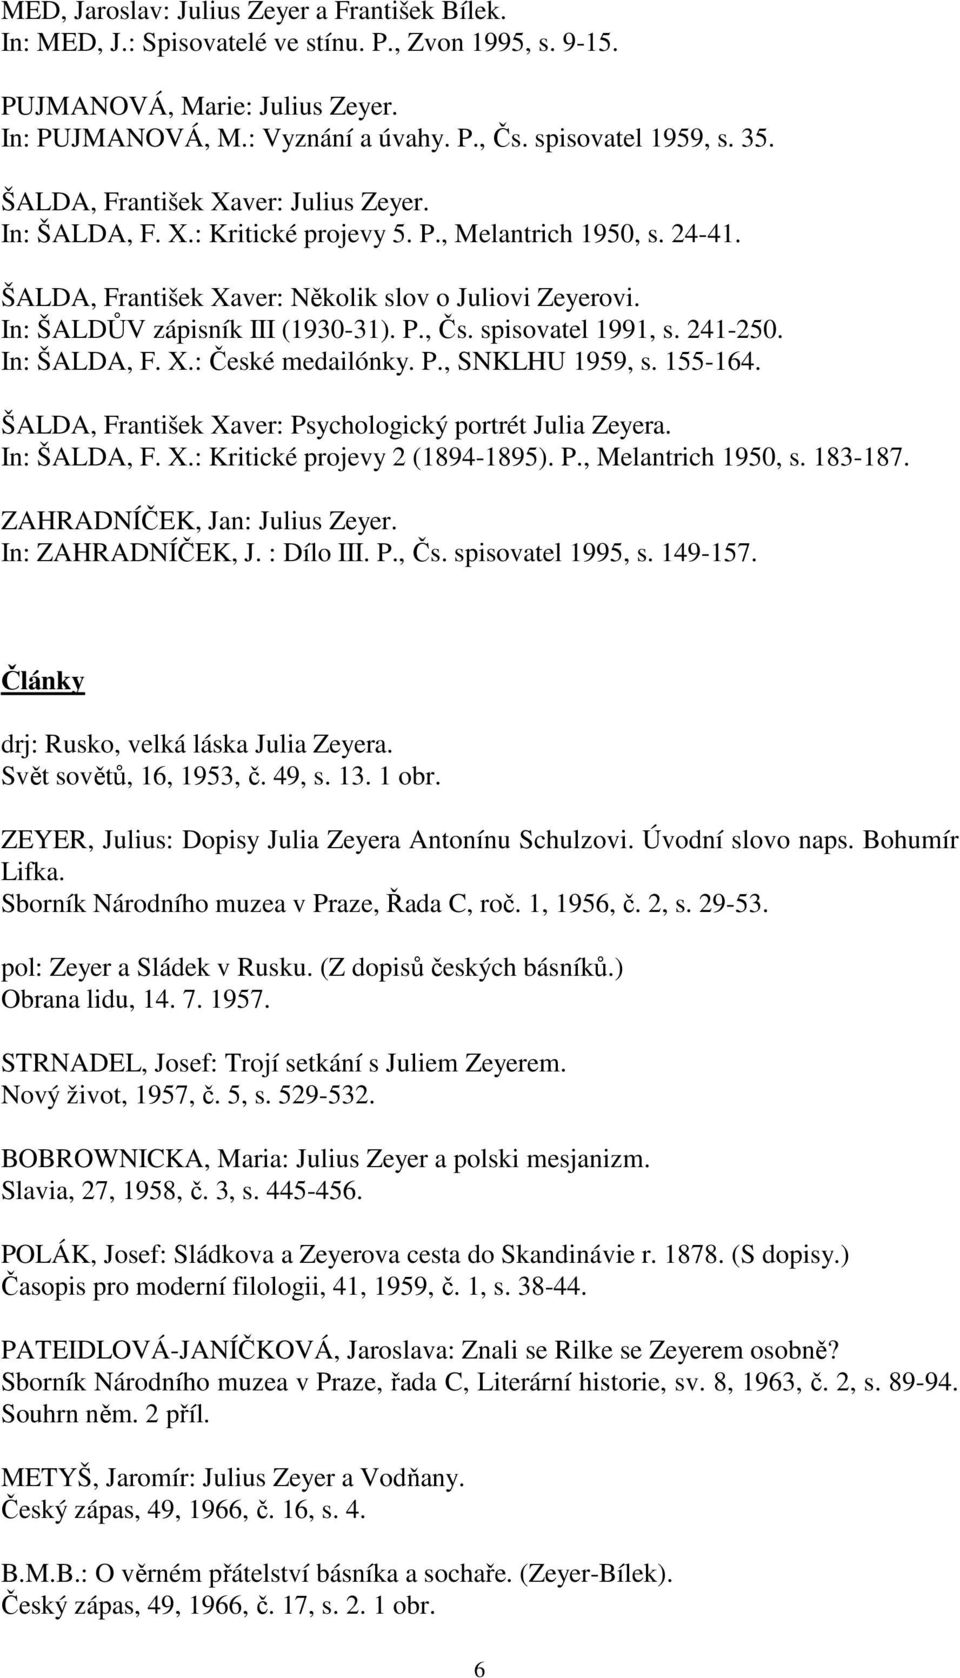 In: ŠALDŮV zápisník III (1930-31). P., Čs. spisovatel 1991, s. 241-250. In: ŠALDA, F. X.: České medailónky. P., SNKLHU 1959, s. 155-164. ŠALDA, František Xaver: Psychologický portrét Julia Zeyera.